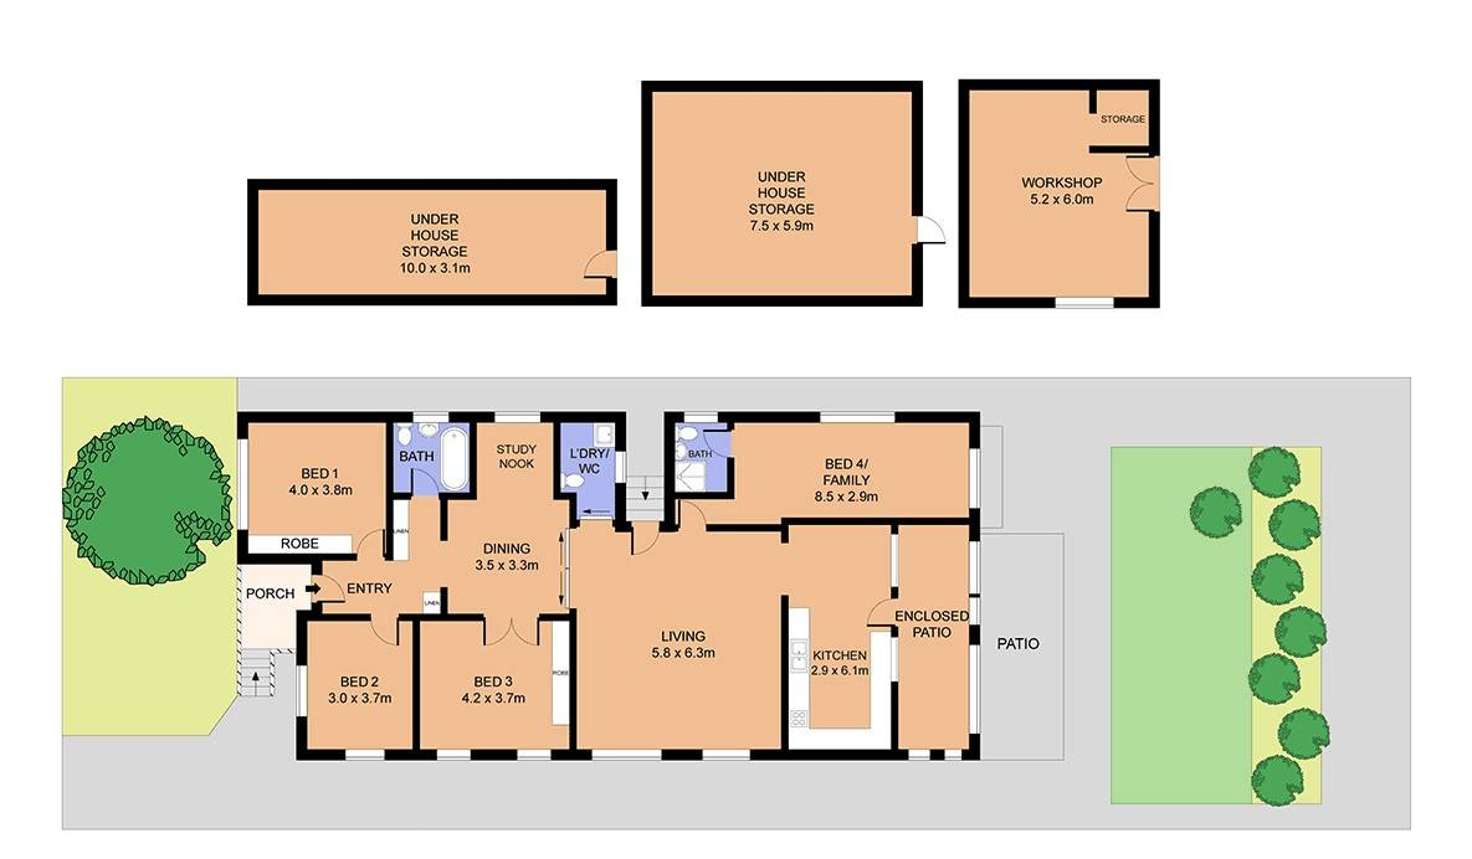 Floorplan of Homely house listing, 28 Melville Street, Ashbury NSW 2193